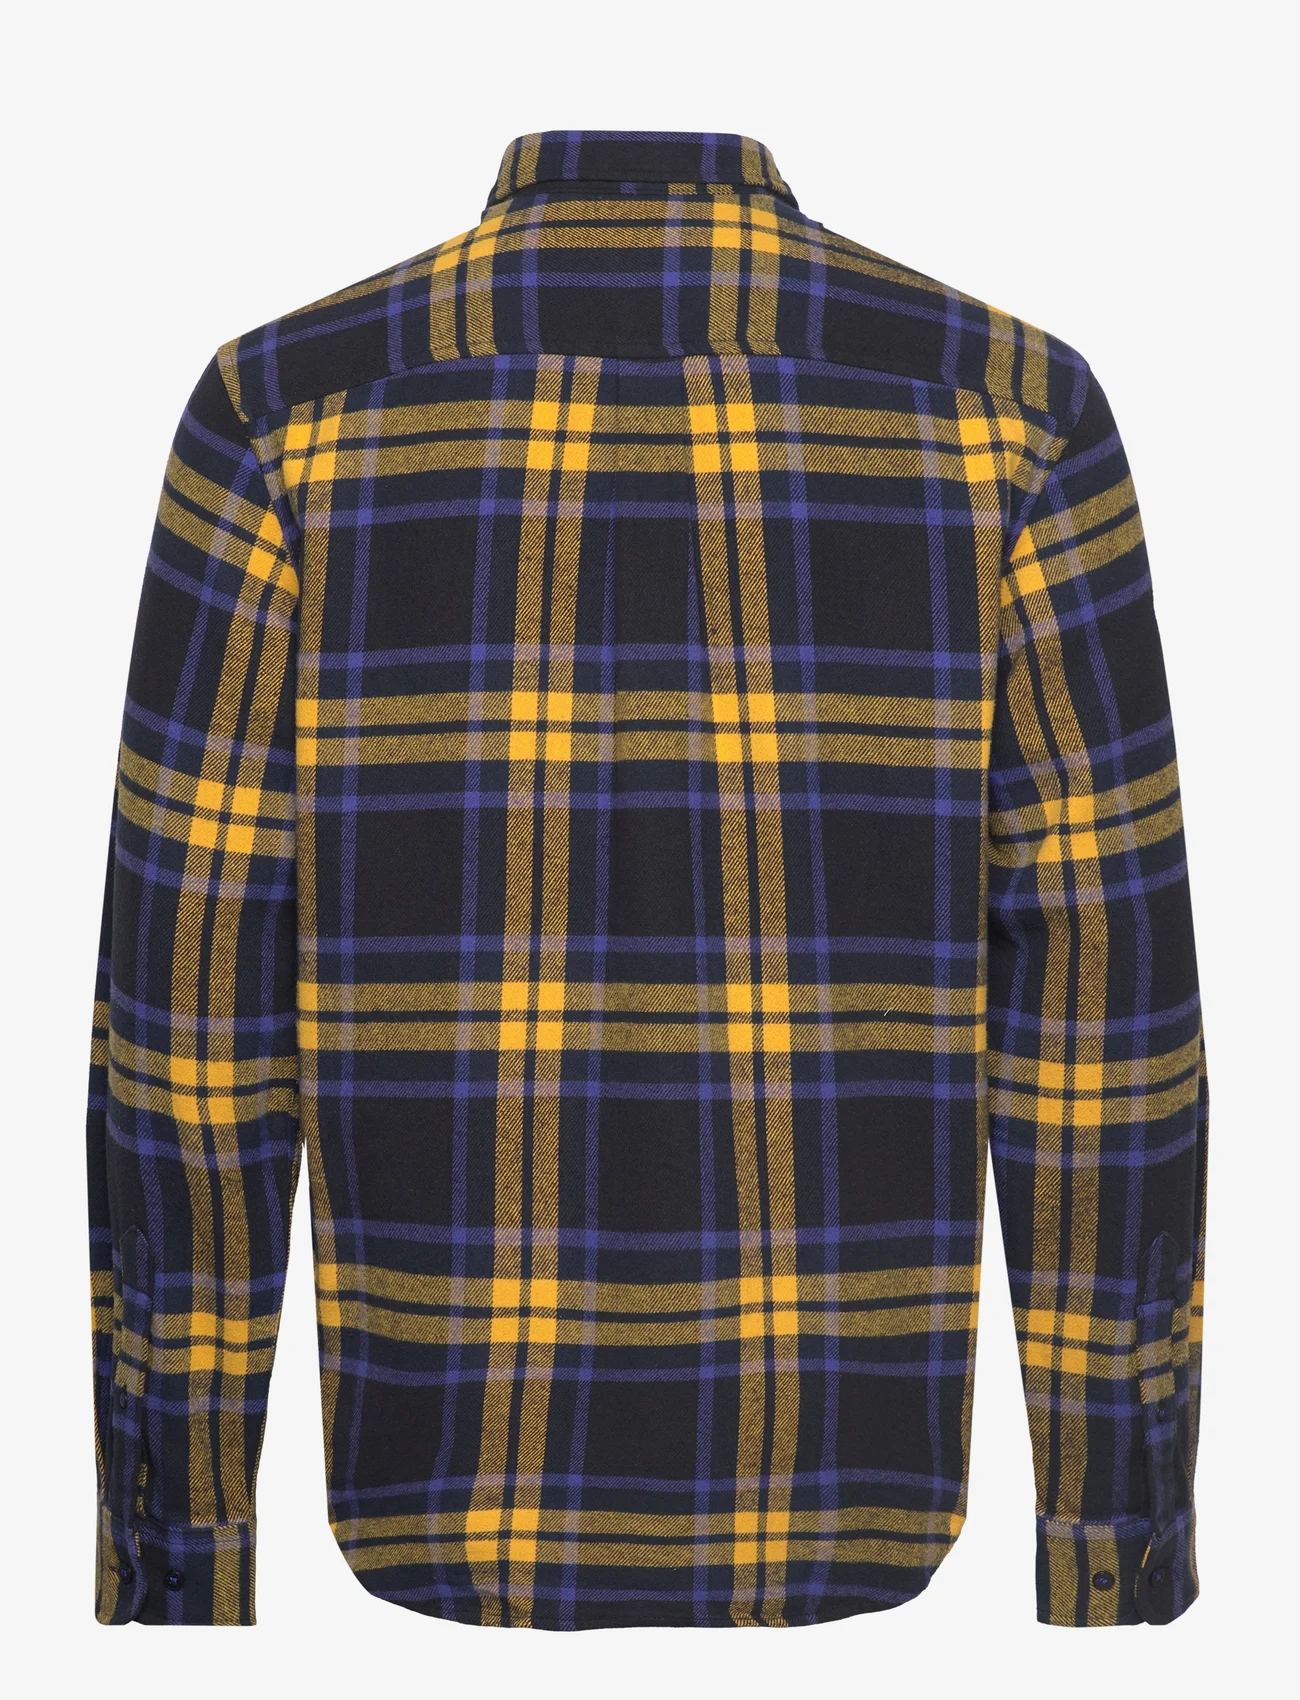 Timberland - LS Heavy Flannel Plaid - casual skjorter - black yd - 1